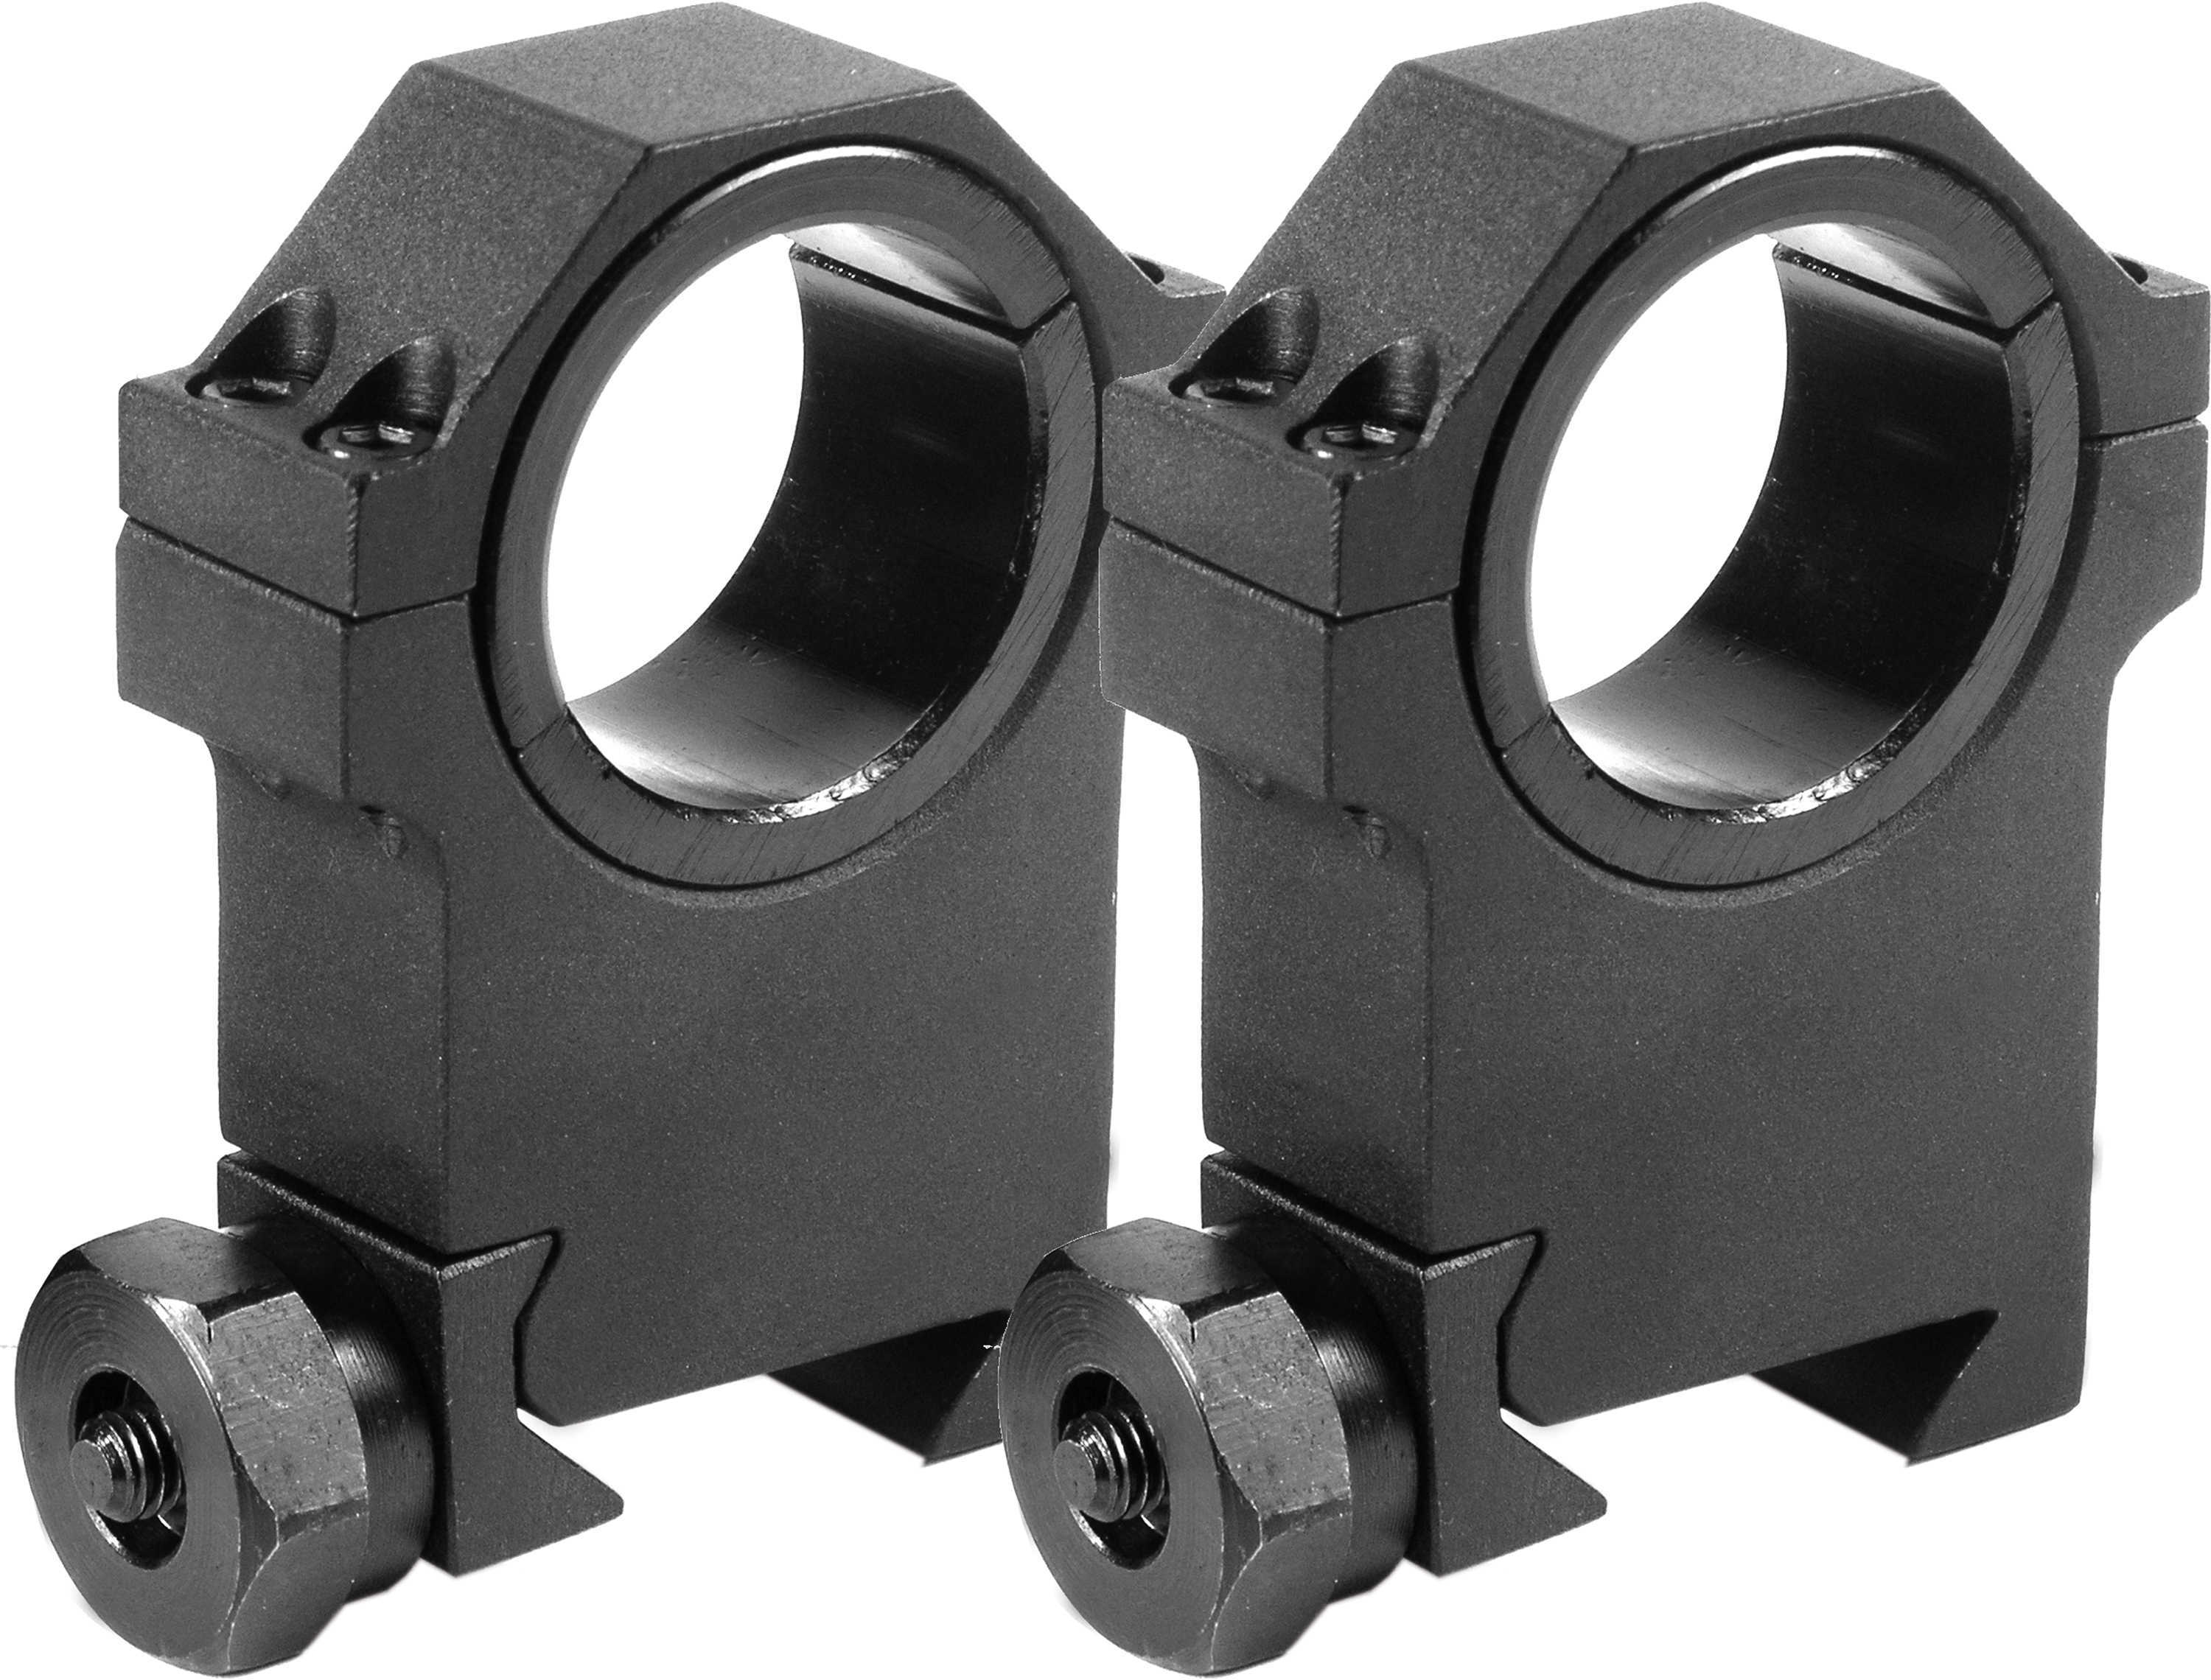 Barska Optics 30mm Standard Accepts up to 56mm Extra High Diameter Black AI11063